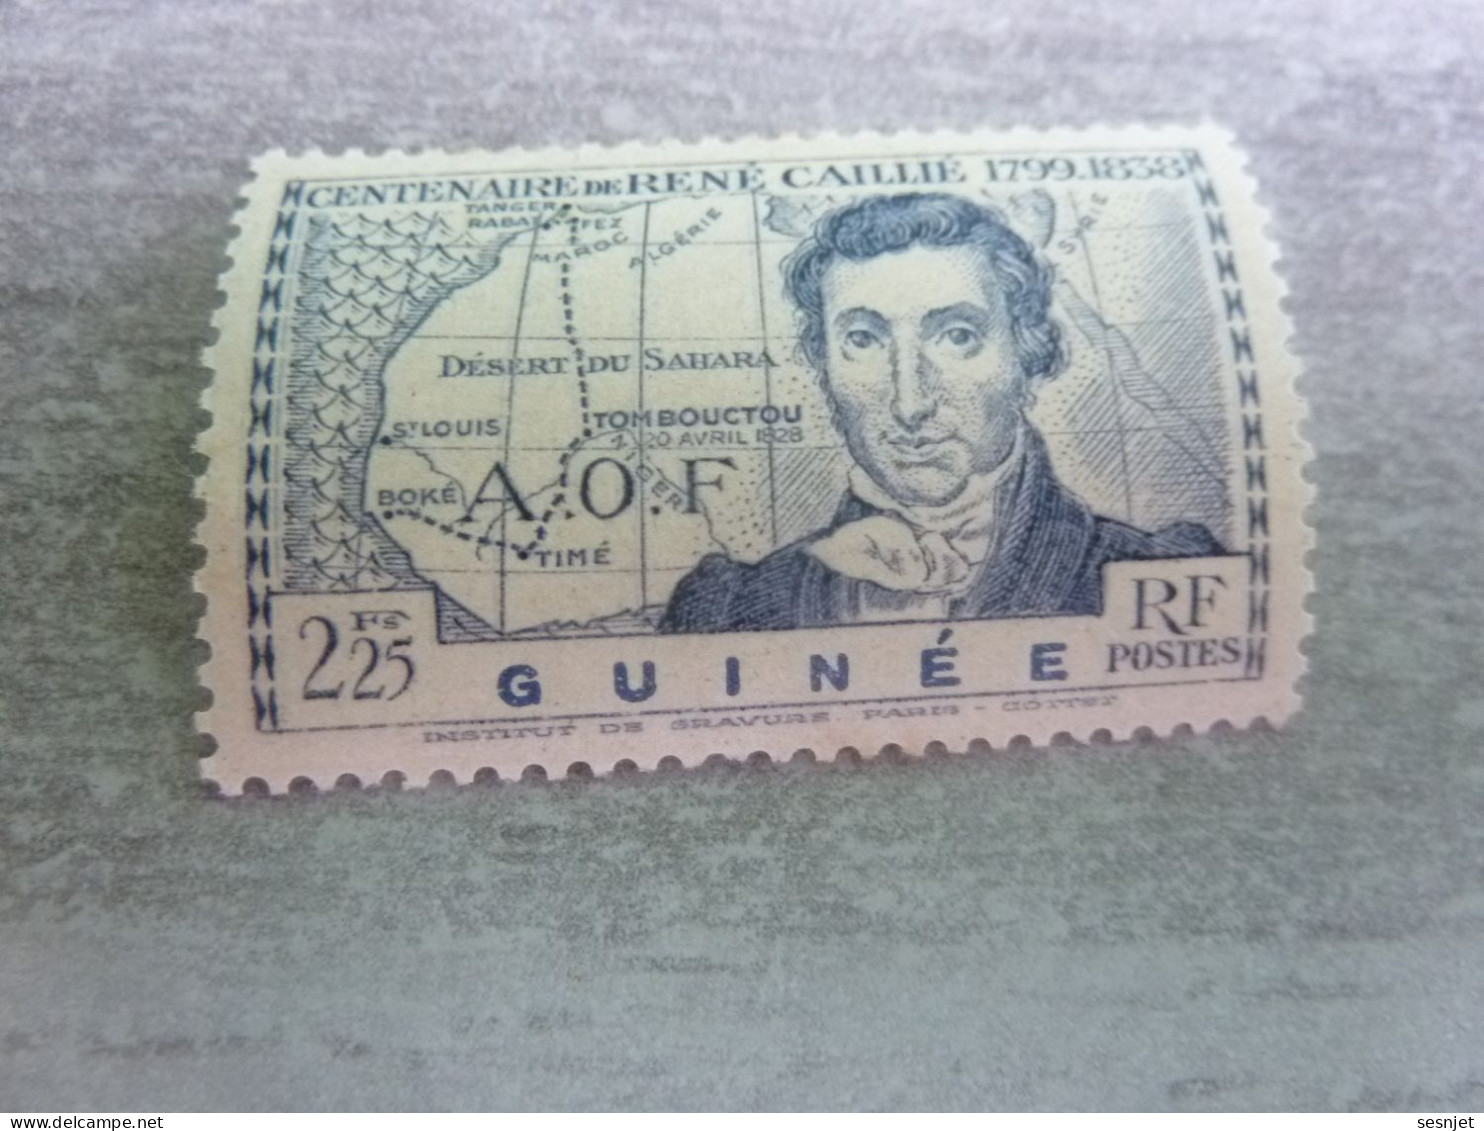 René Caillié (1709-1838) - A.o.f. - Guinée - 2f.25 - Yt 150 - Outremer - Neuf Sans Trace - Année 1939 - - Nuevos